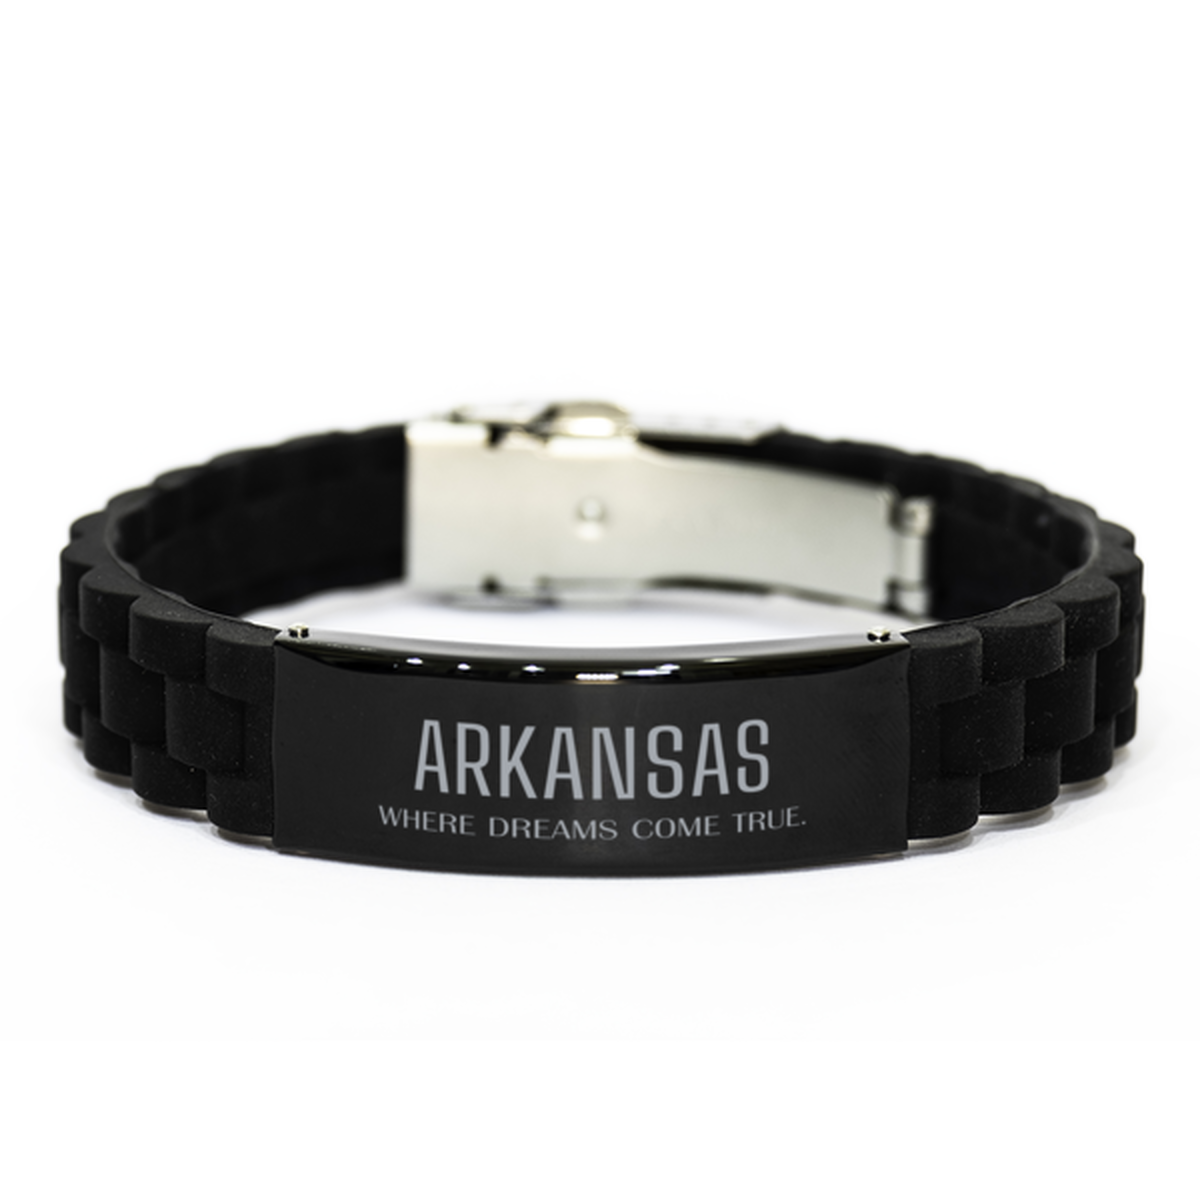 Love Arkansas State Black Glidelock Clasp Bracelet, Arkansas Where dreams come true, Birthday Inspirational Gifts For Arkansas Men, Women, Friends